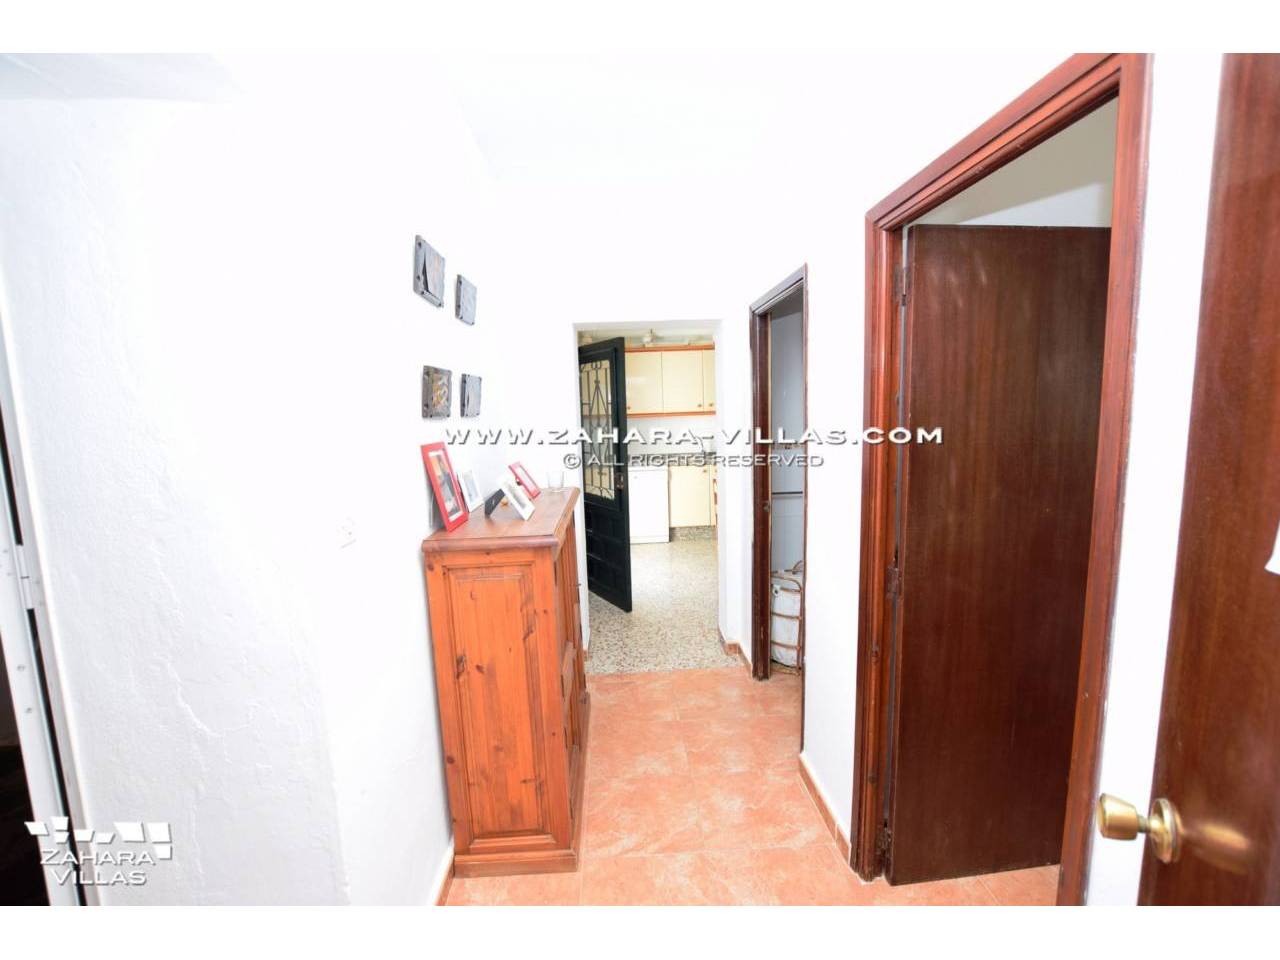 Imagen 7 de House in Avda. Del Pradillo for sale in the town of Zahara de los Atunes